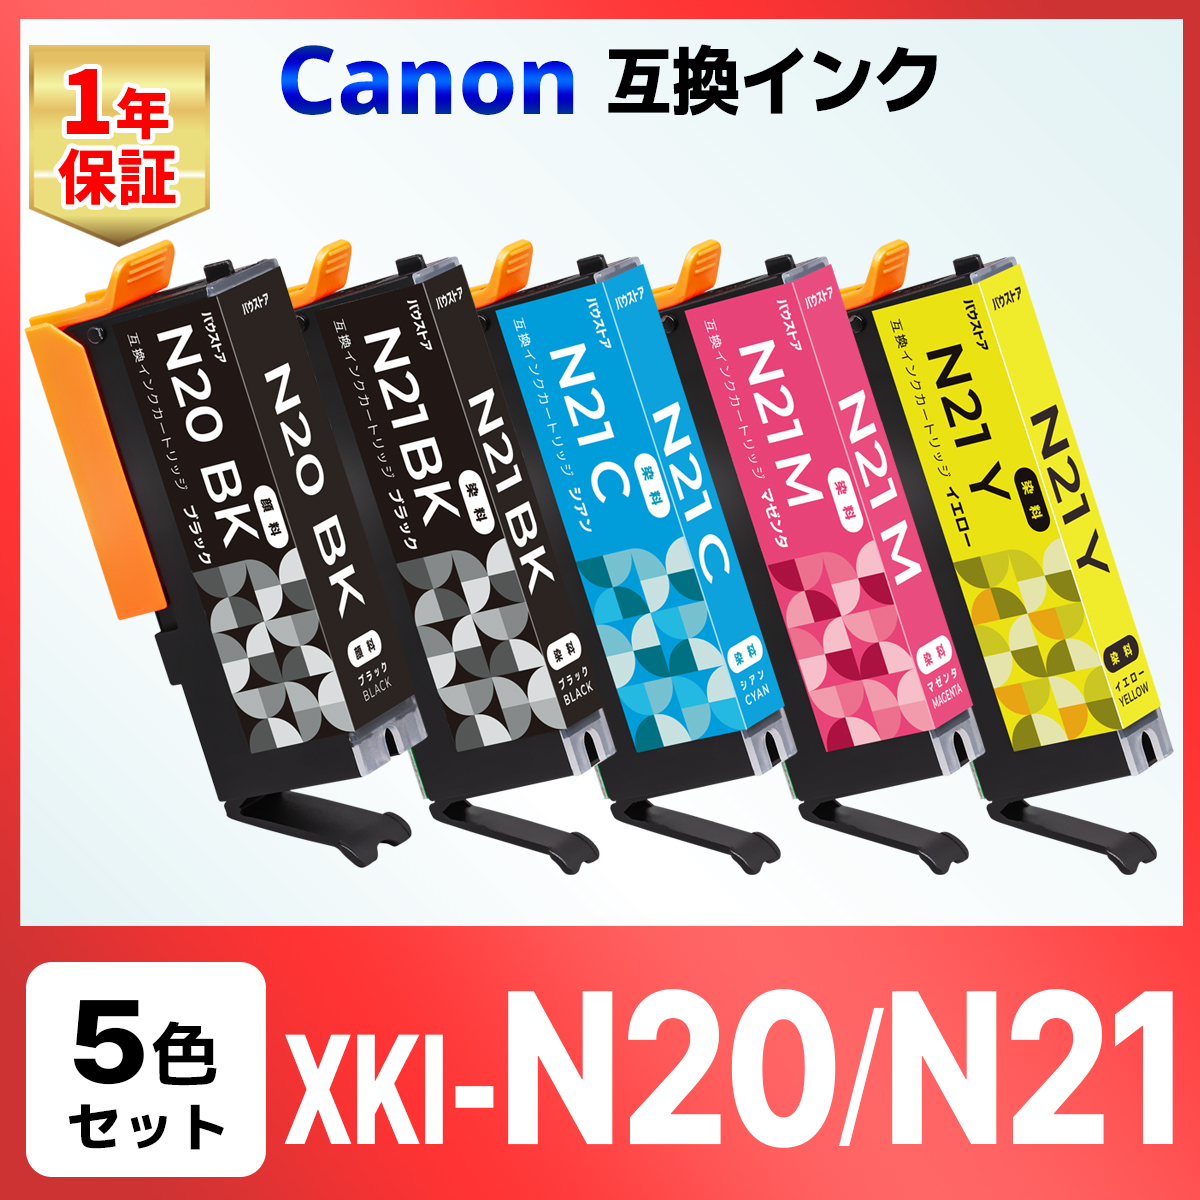 XKI-N21+N20/5MP XKI-N20 XKI-N21 互換インク XK110 XK100 XK500 XK120 Canon キャノン 5色セット XKIN20 XKIN21 XKI N20 XKI N21